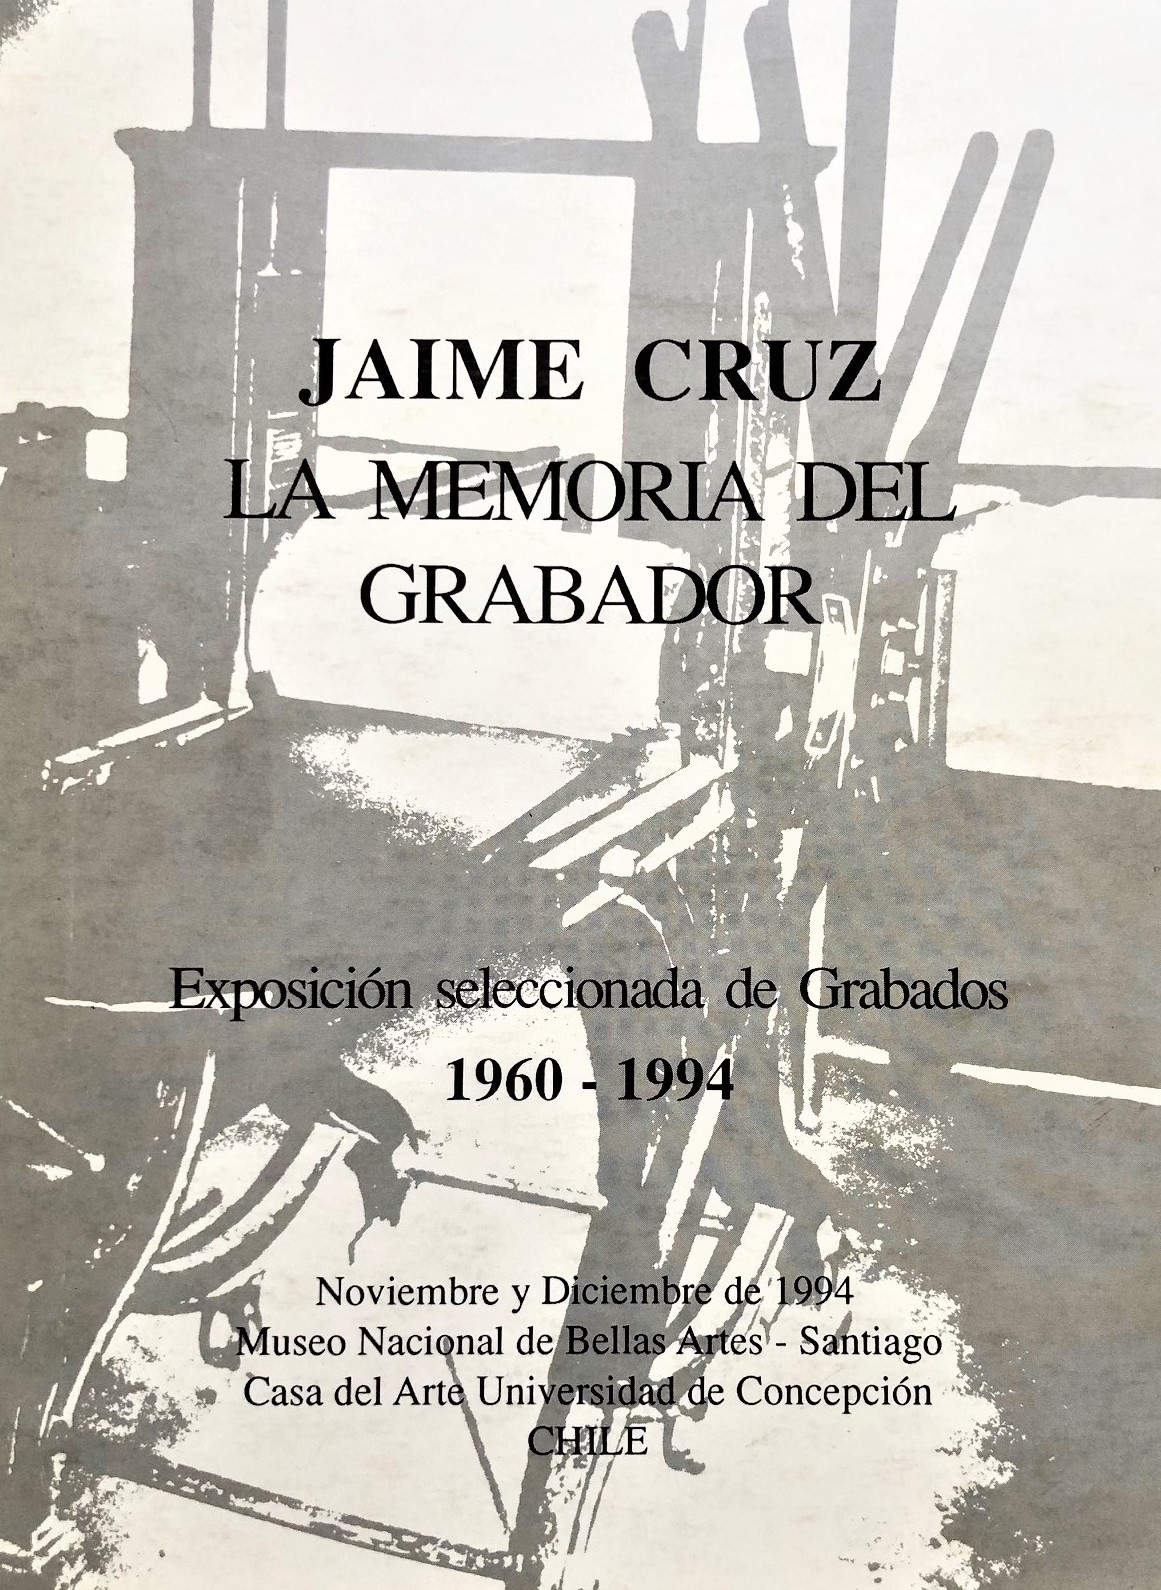 Jaime Cruz - La memoria del grabador